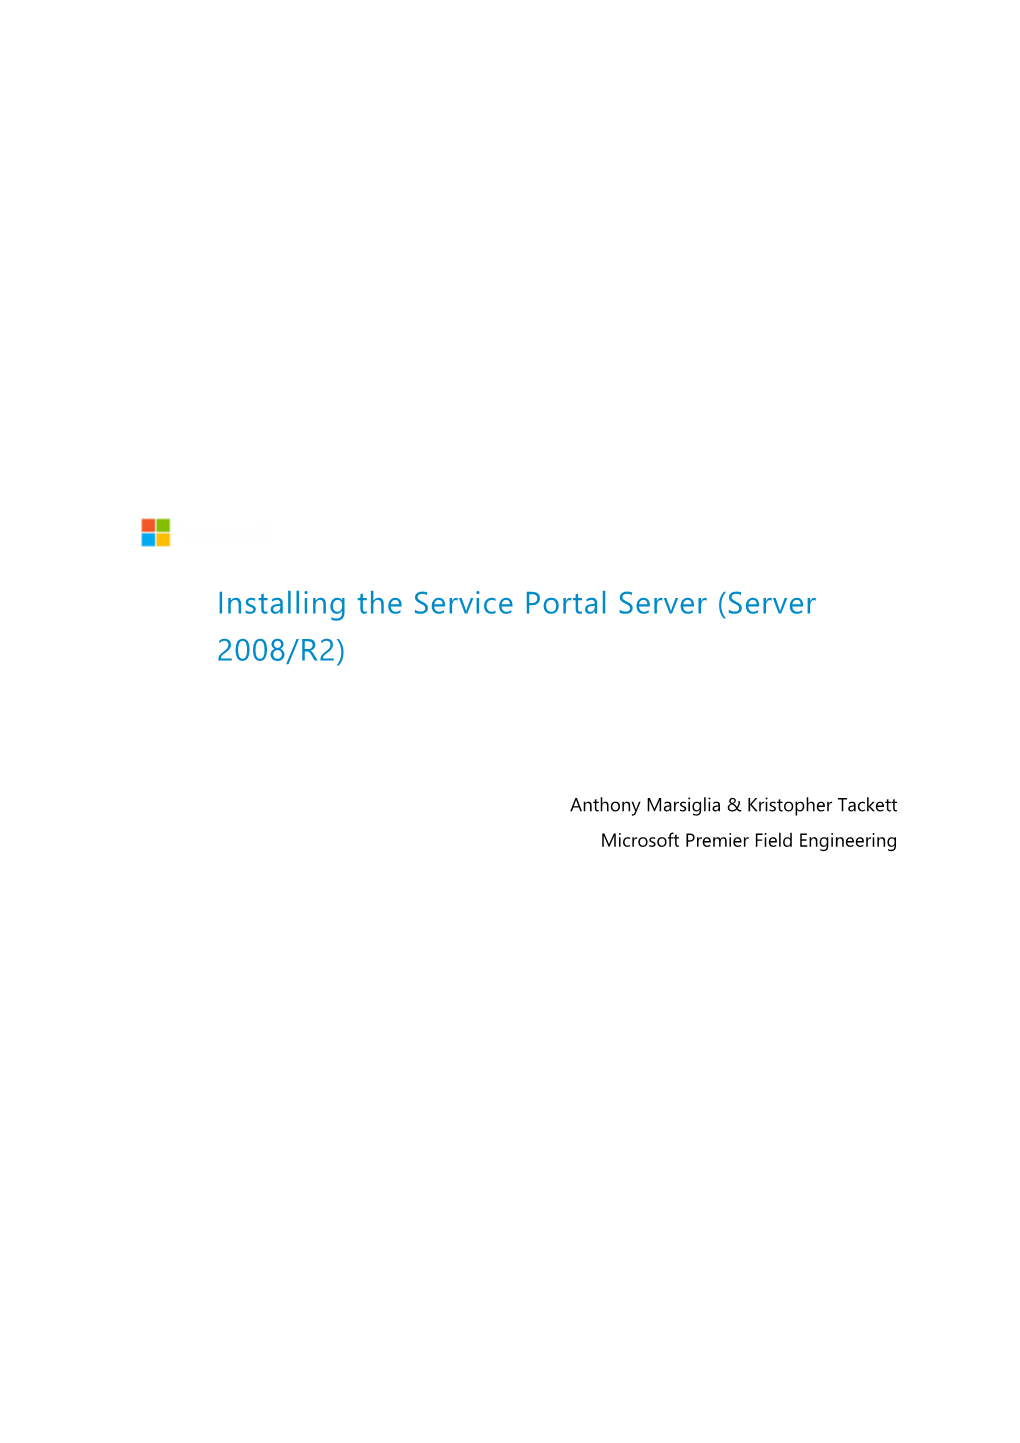 Installing the Service Portal Server (Server 2008/R2)